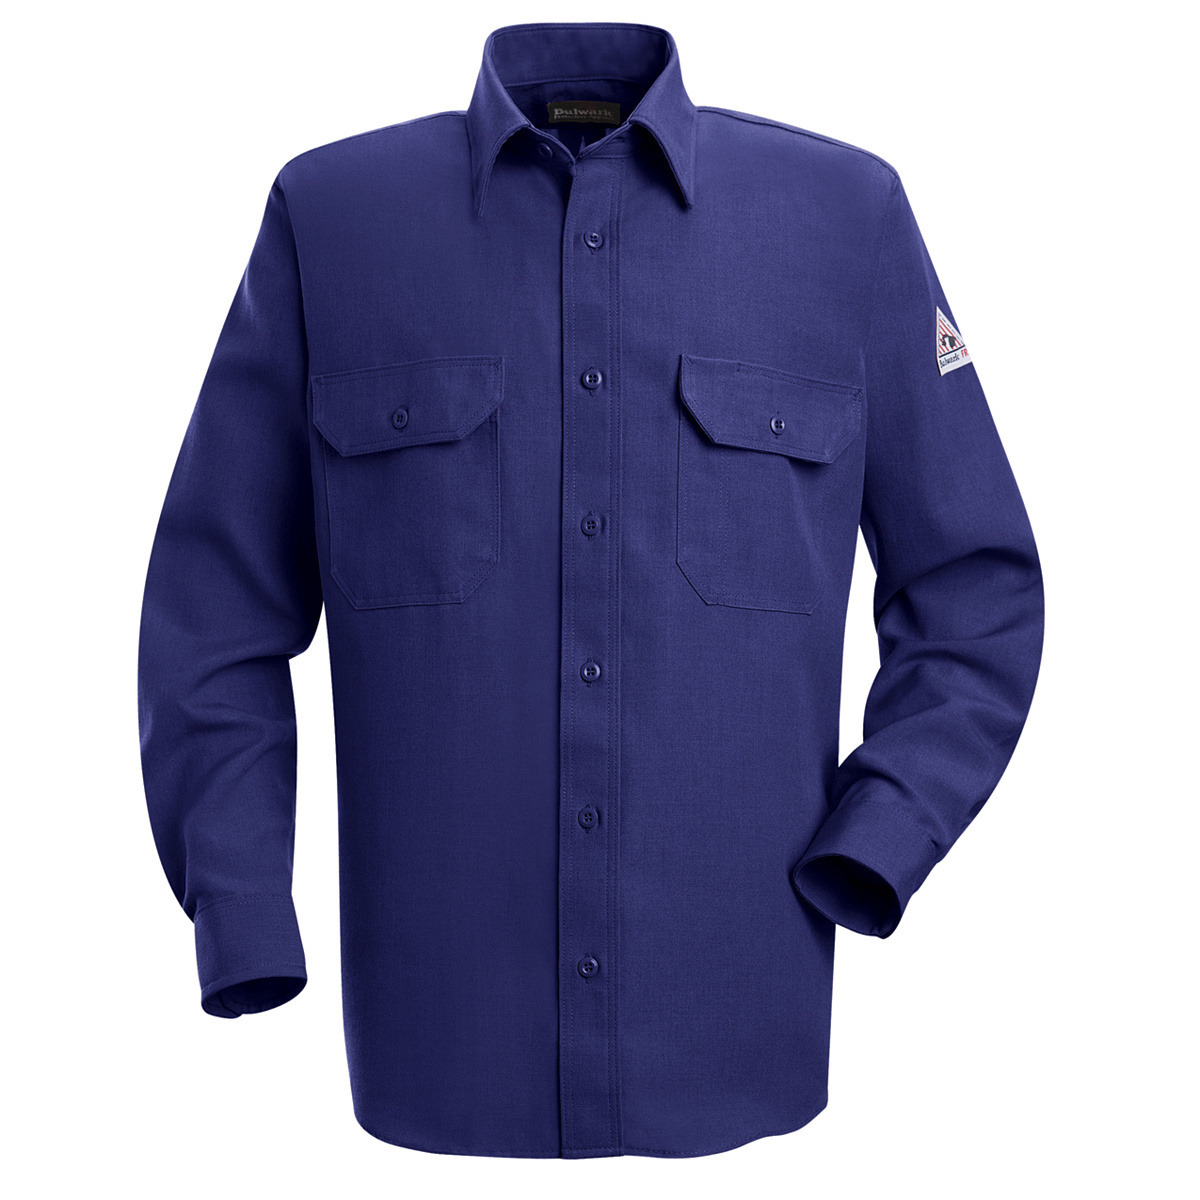 Bulwark® 2X Regular Royal Blue Nomex® IIIA/Nomex® Aramid/Kevlar® Aramid Flame Resistant Uniform Shirt With Button Front Closure